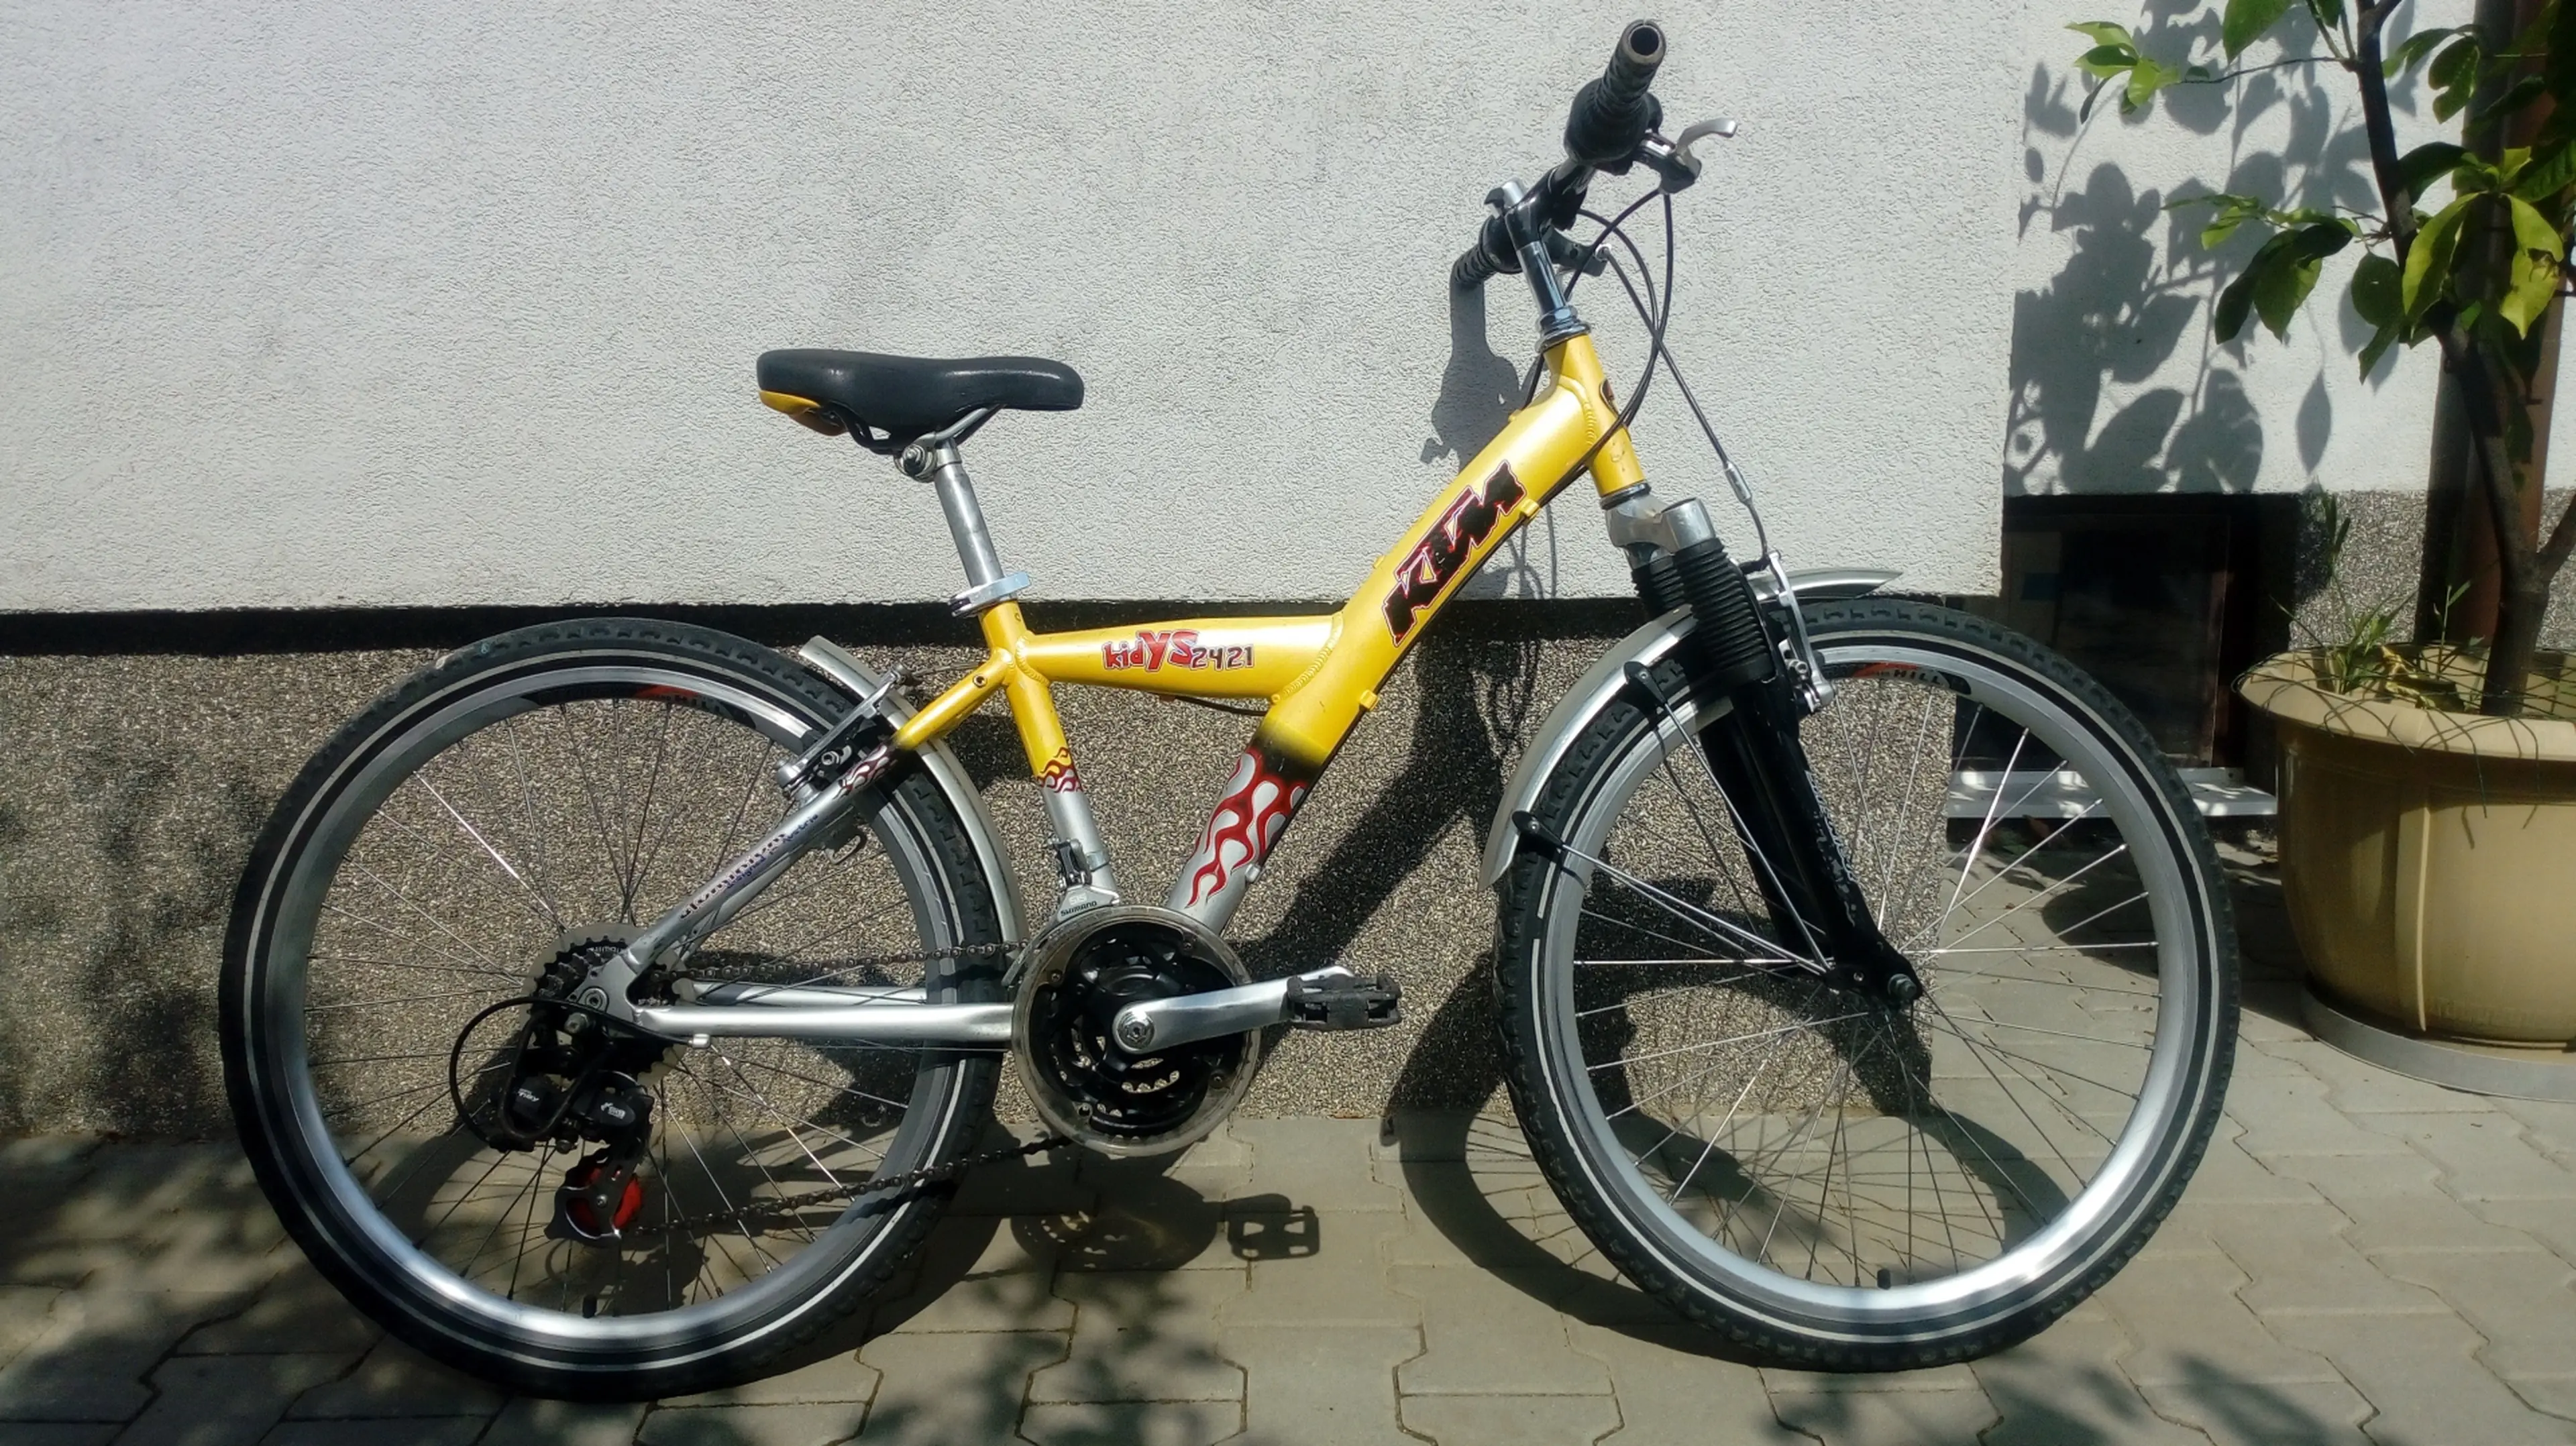 2. Bicicleta KTM 24"